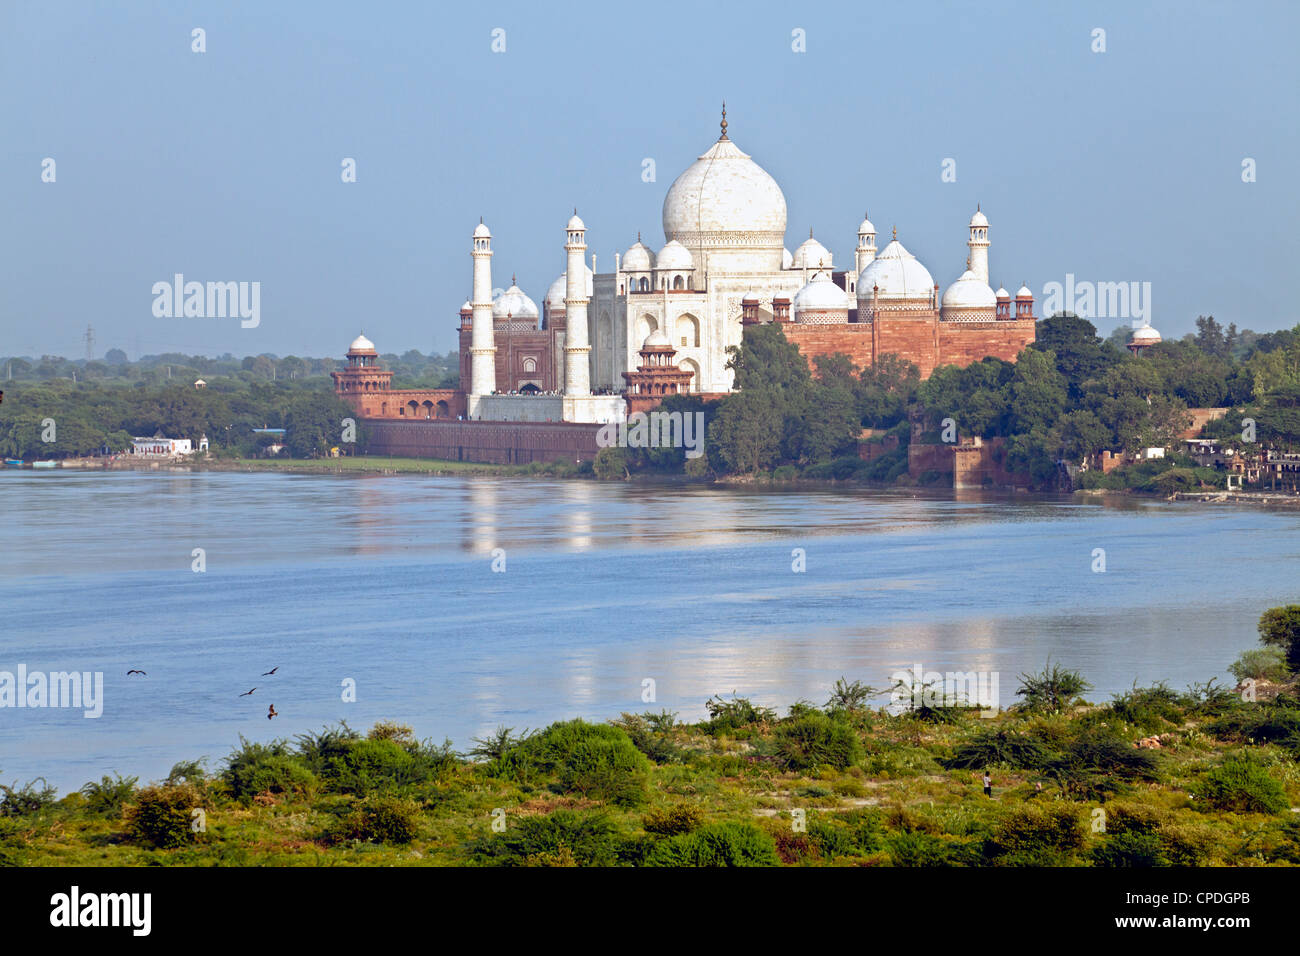 Taj Mahal, UNESCO World Heritage Site, across the Jumna (Yamuna) River, Agra, Uttar Pradesh state, India, Asia Stock Photo